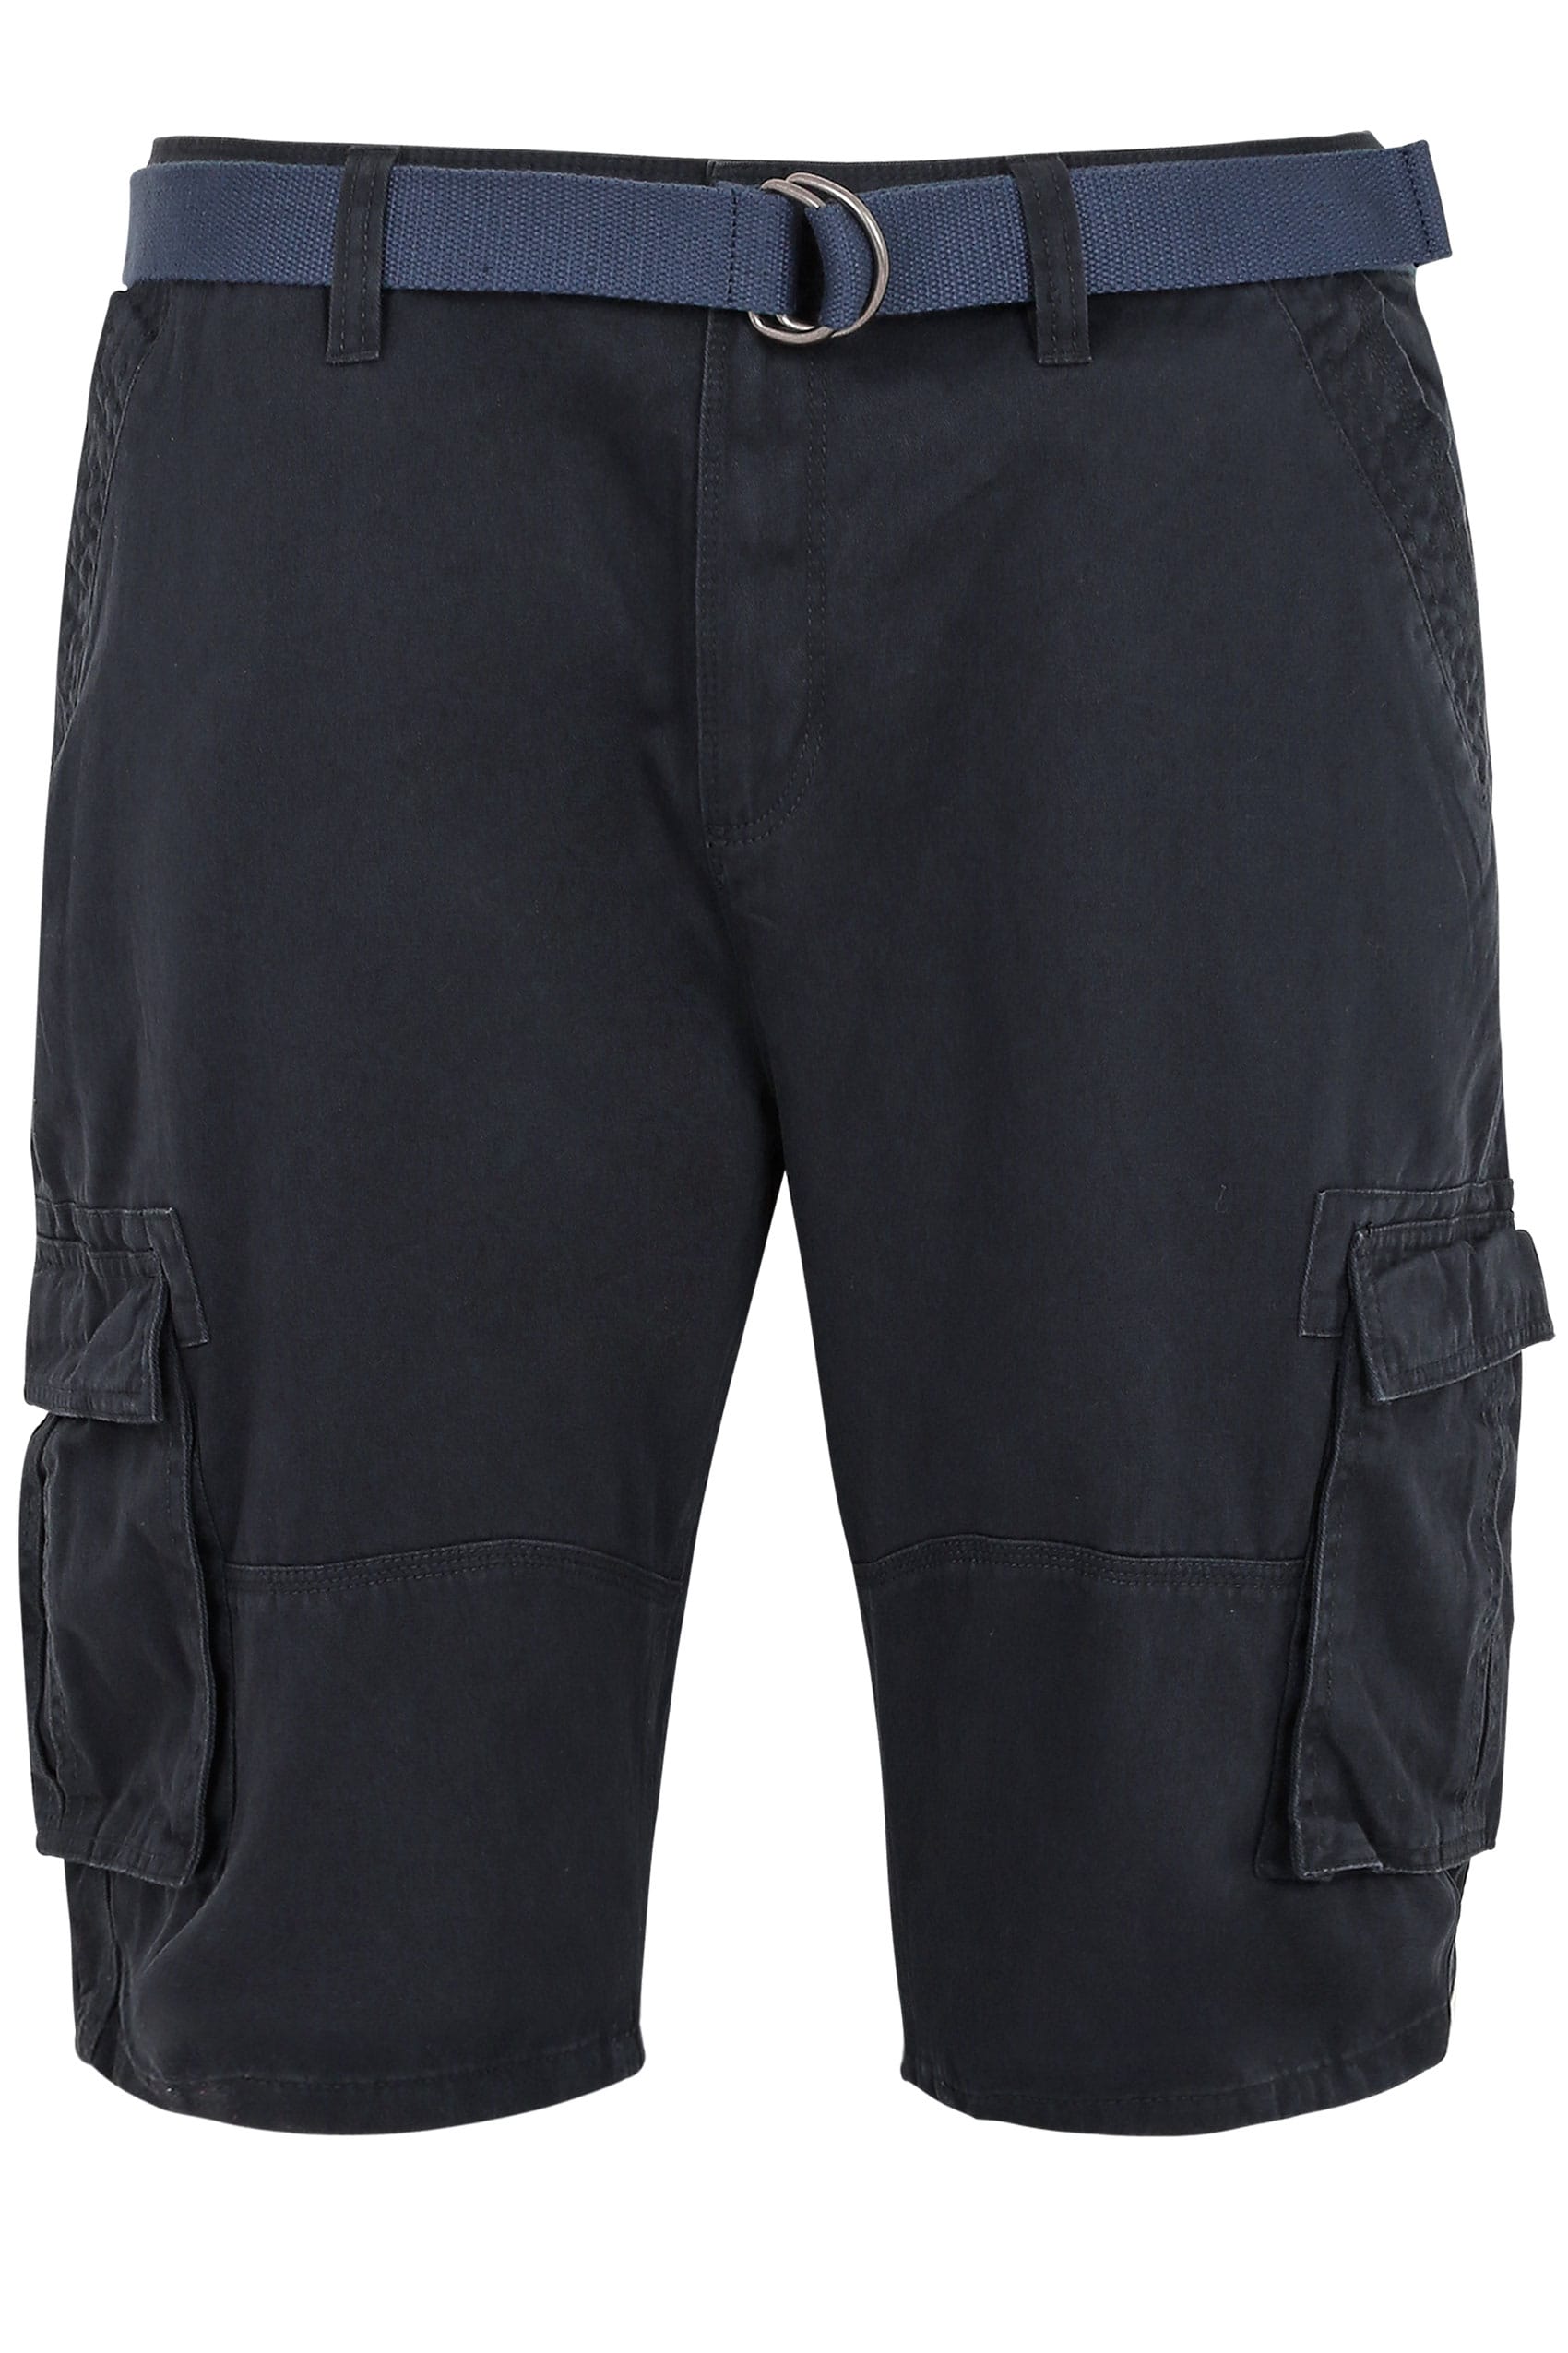 BadRhino Navy Cargo Shorts With Canvas Belt | BadRhino